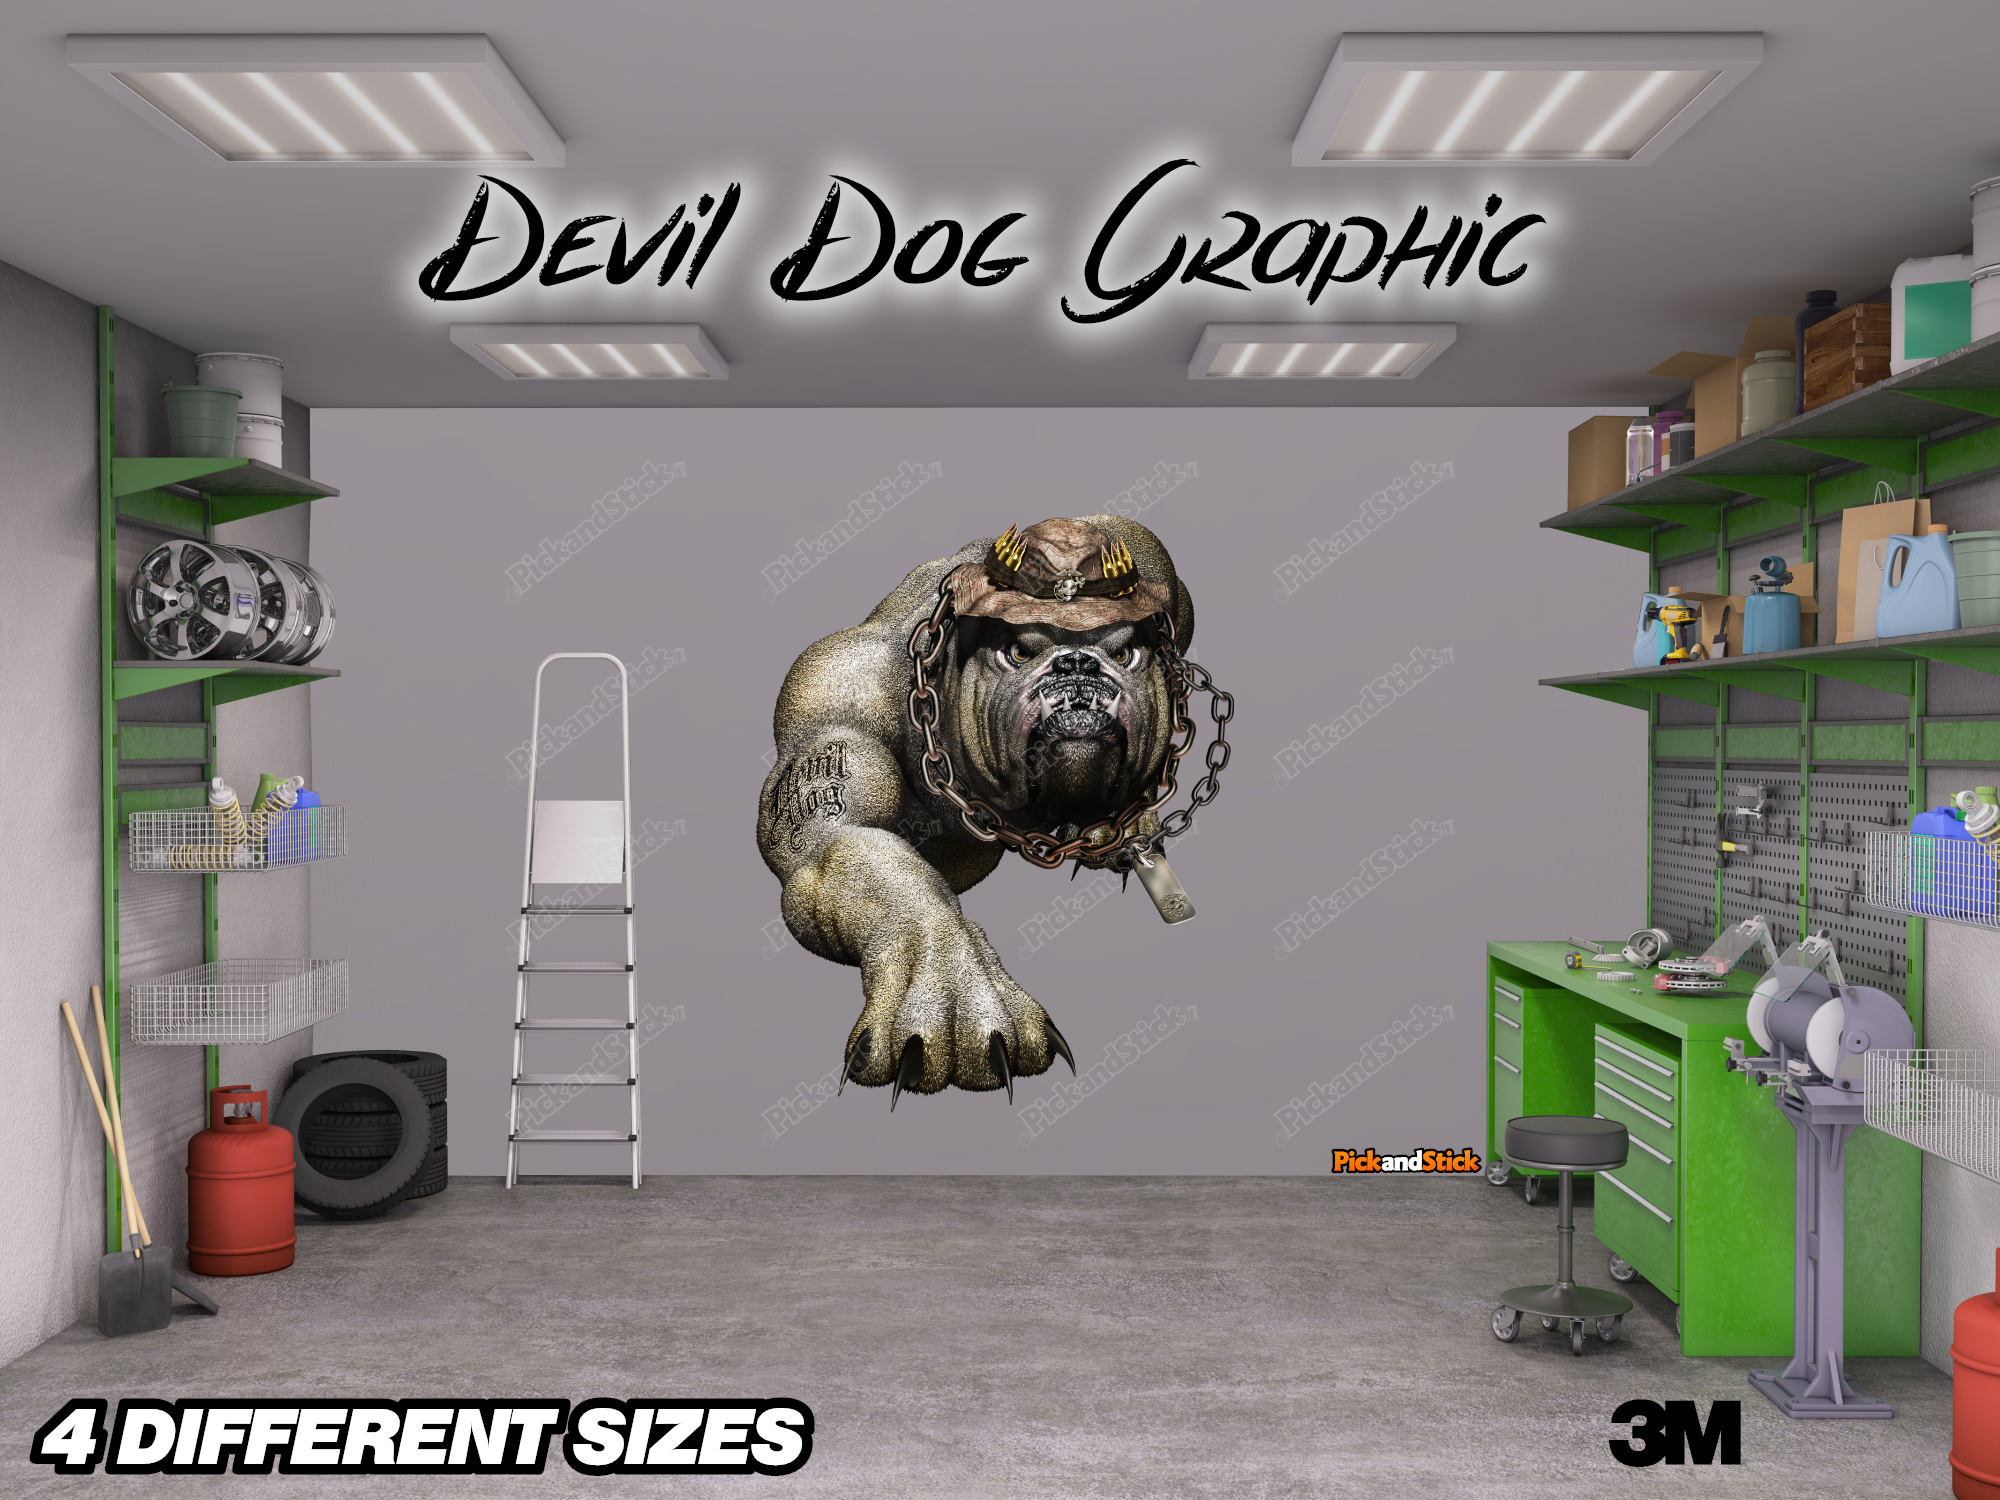 Devil Dog Wall Graphic - PickandStickcom